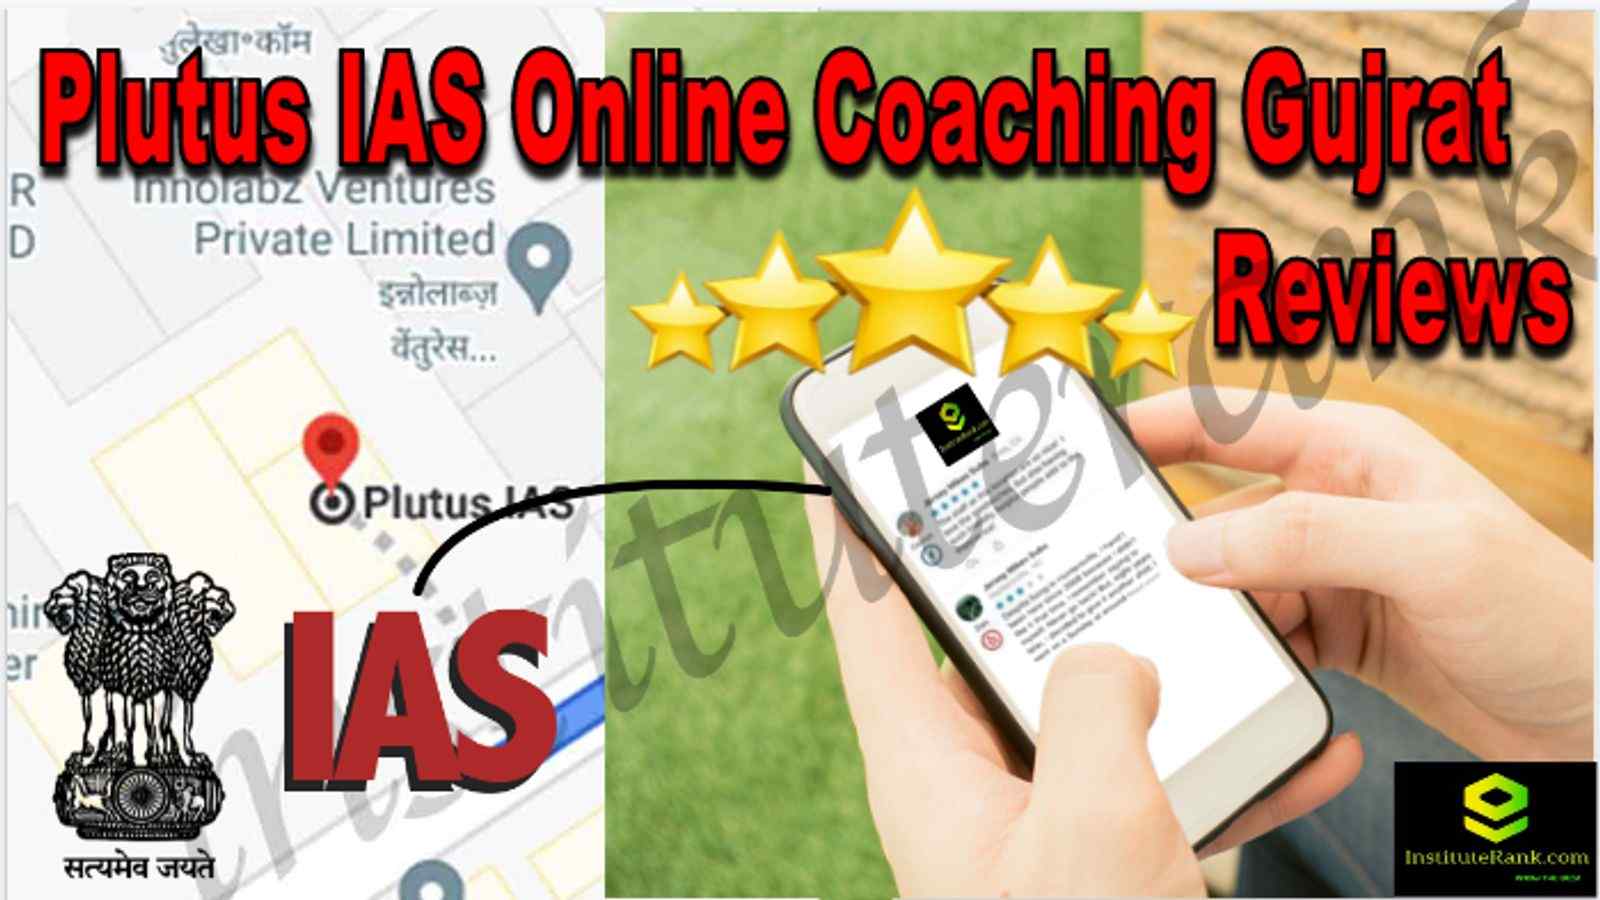 Plutus IAS Online Coaching Gujrat Reviews